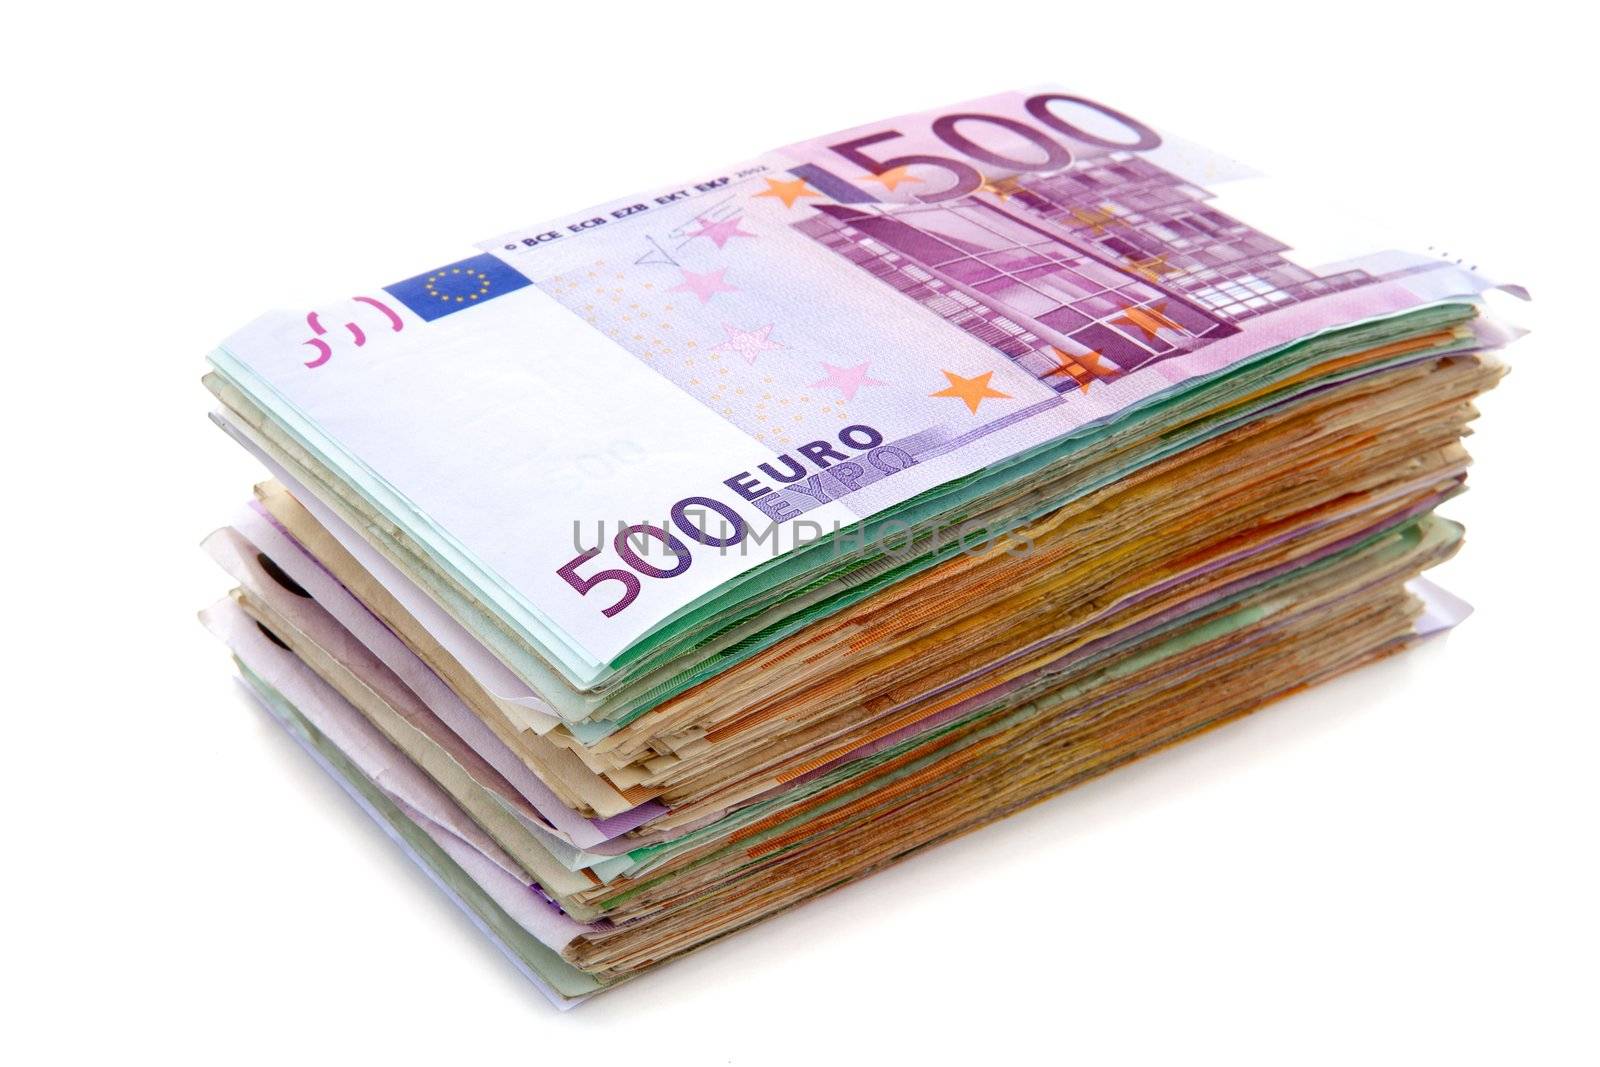 Pile of euro banknotes by karelnoppe